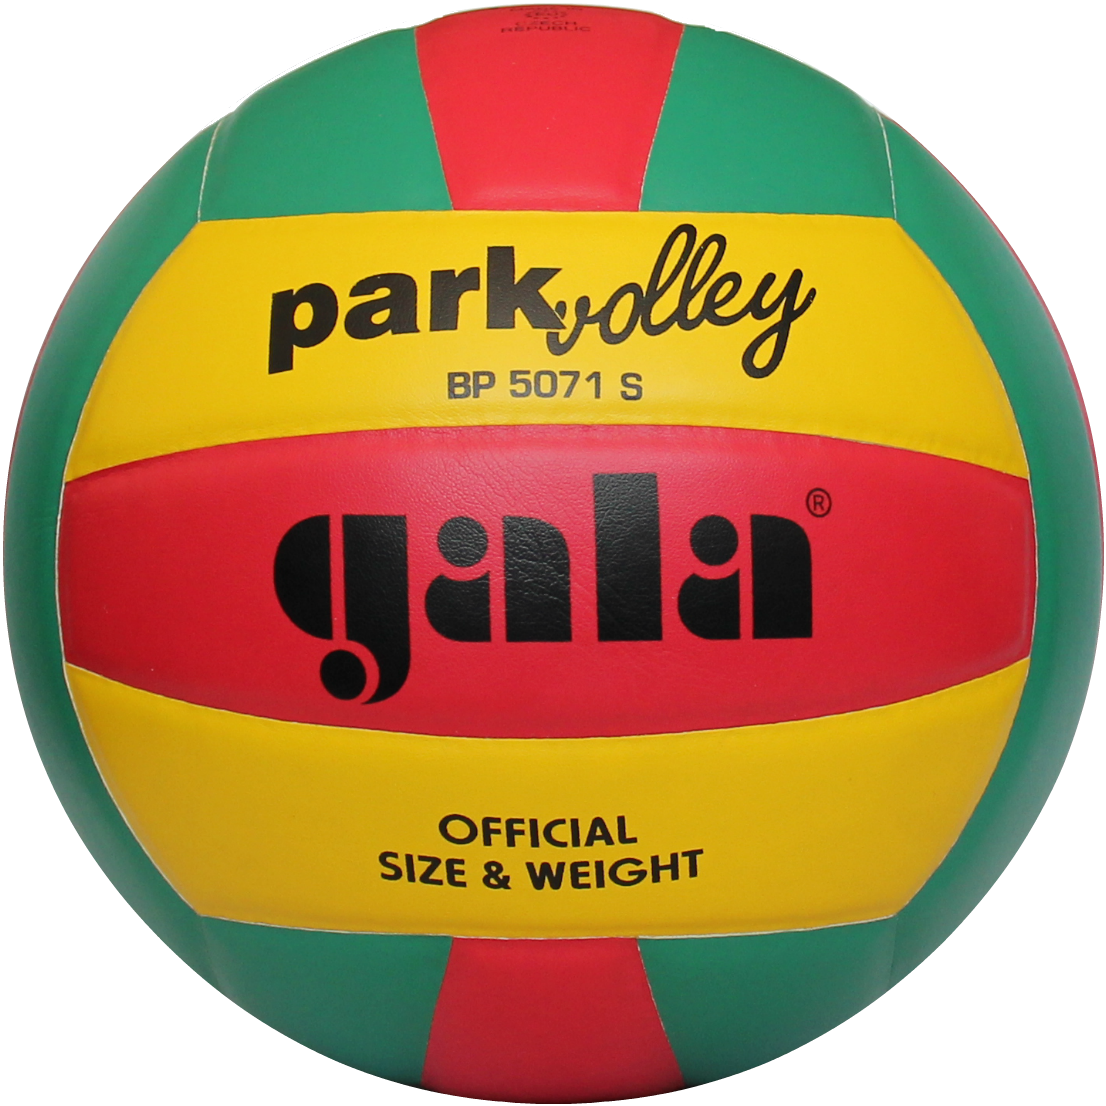 Gala BP5263S1 Smash Plus 6 Beach volleyball 